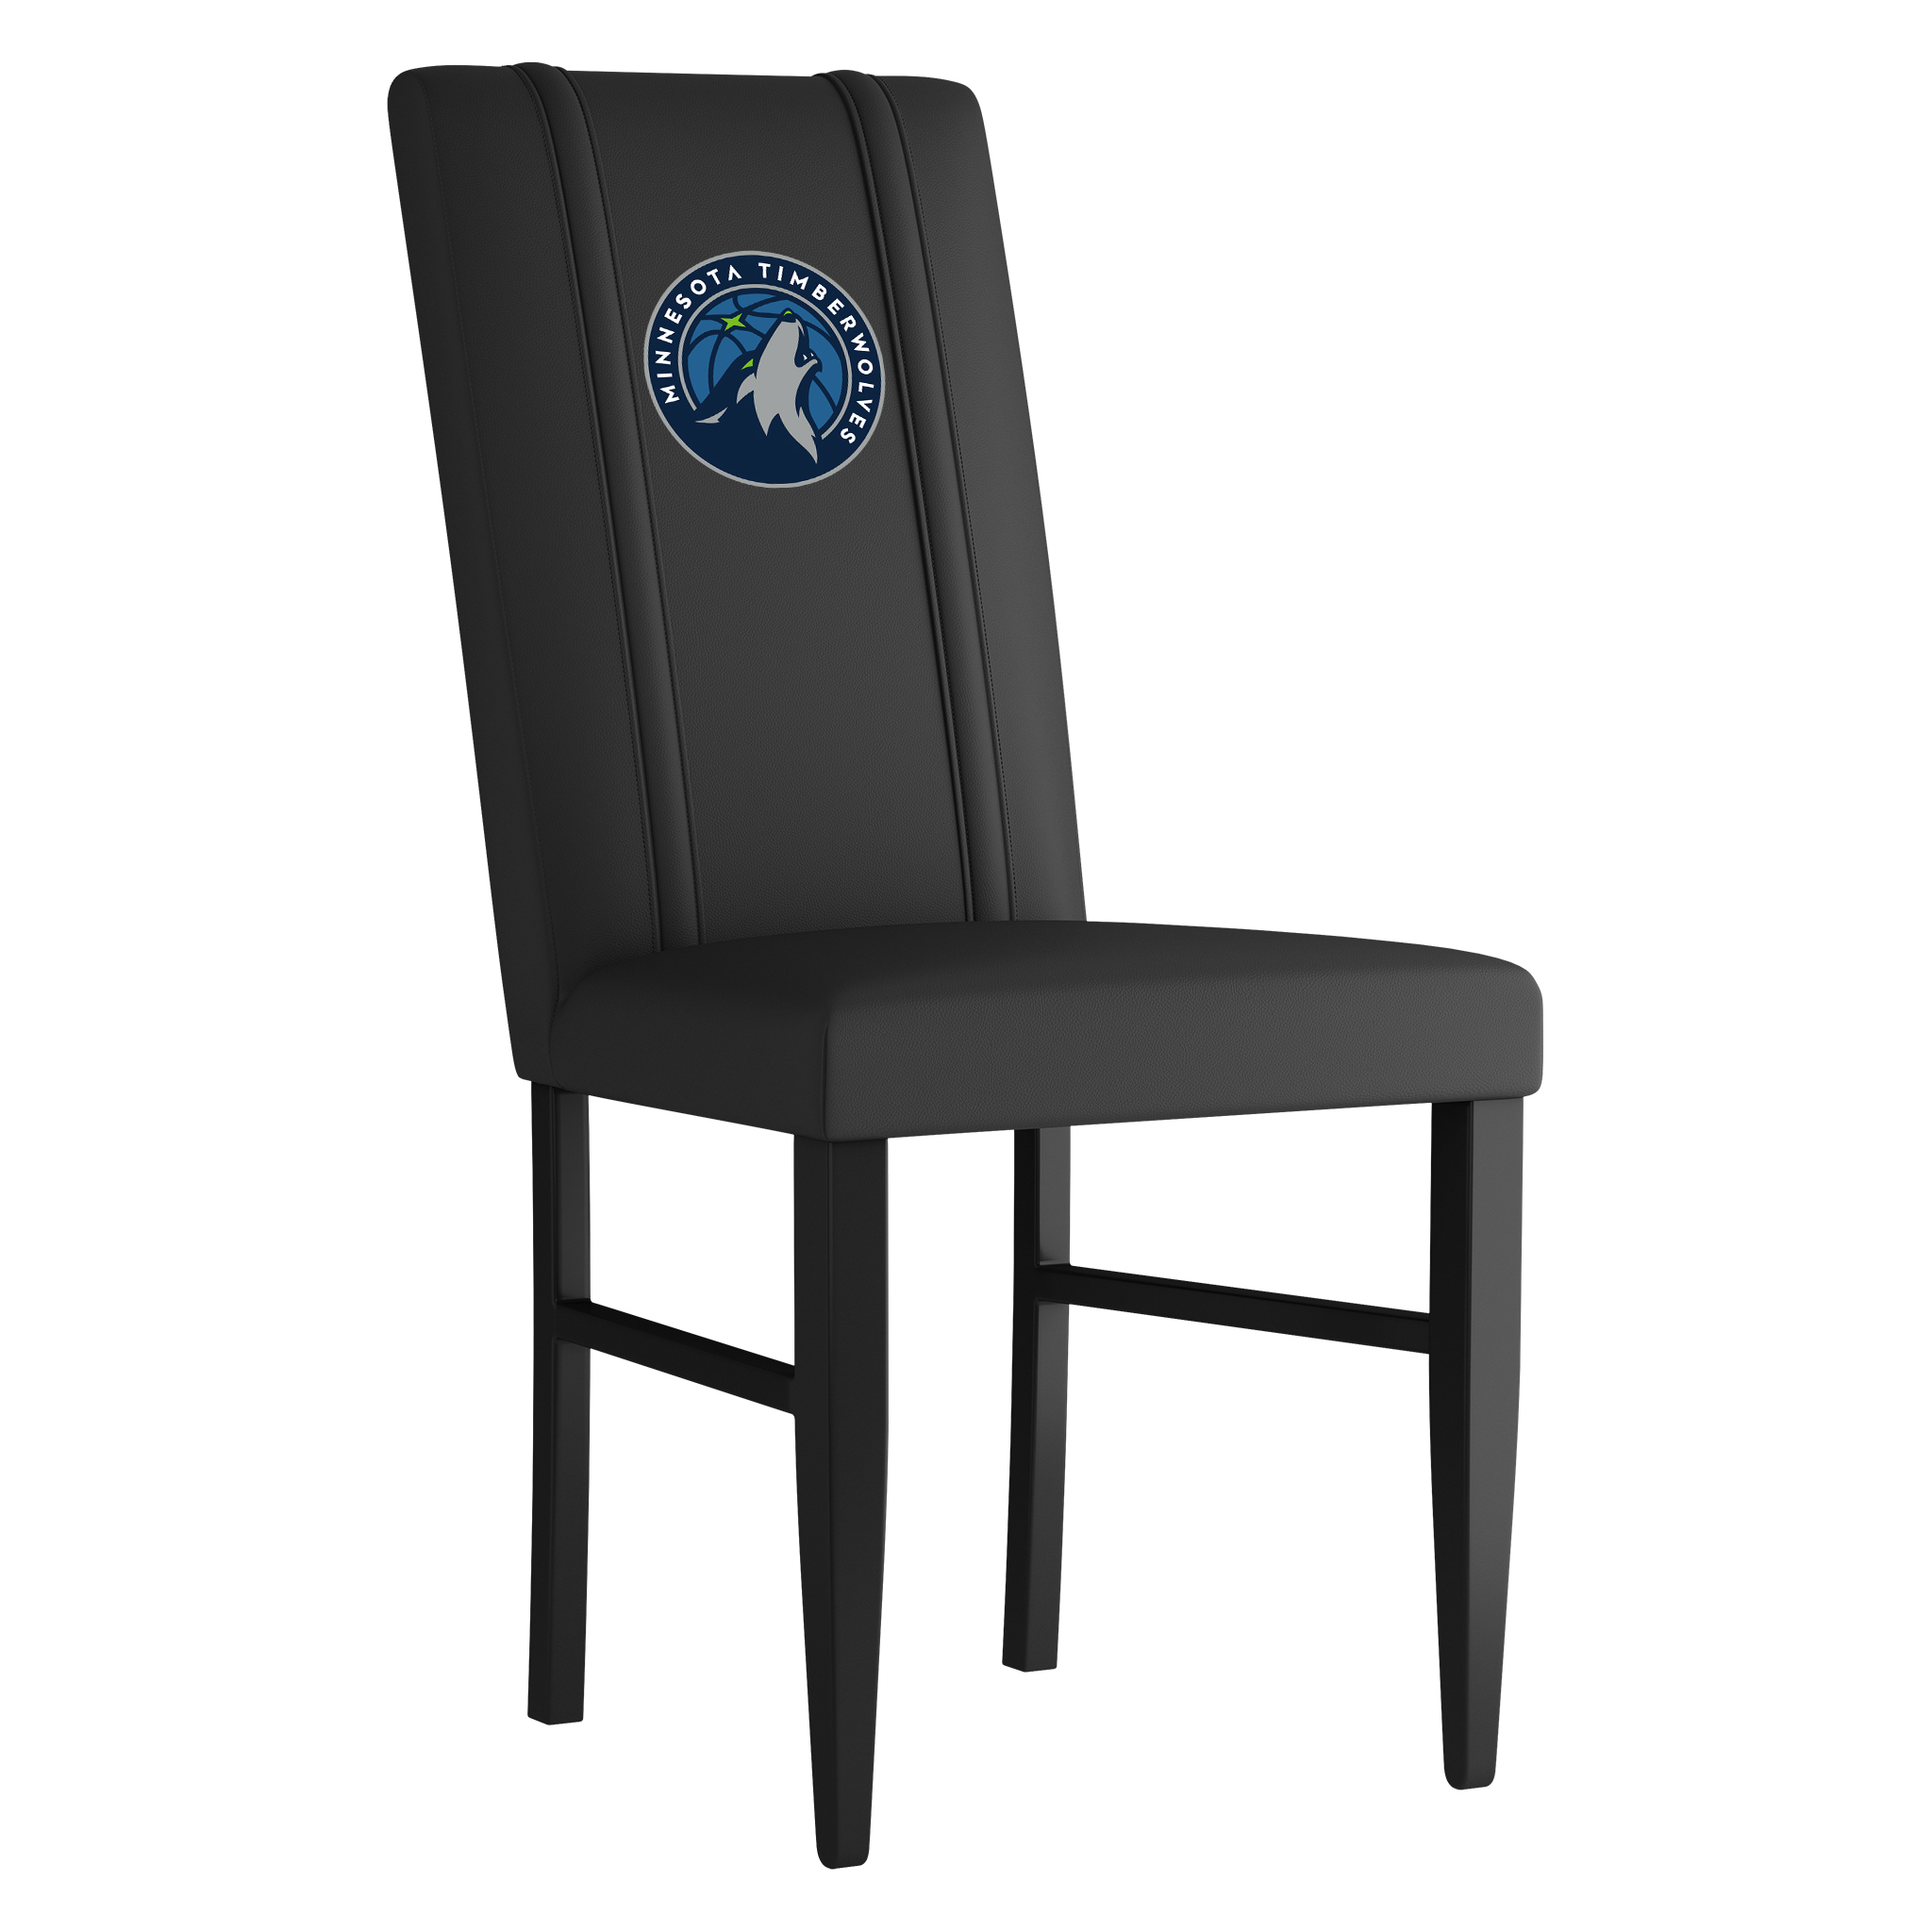 Minnesota Timberwolves Side Chair 2000 With Minnesota Timberwolves Primary Logo